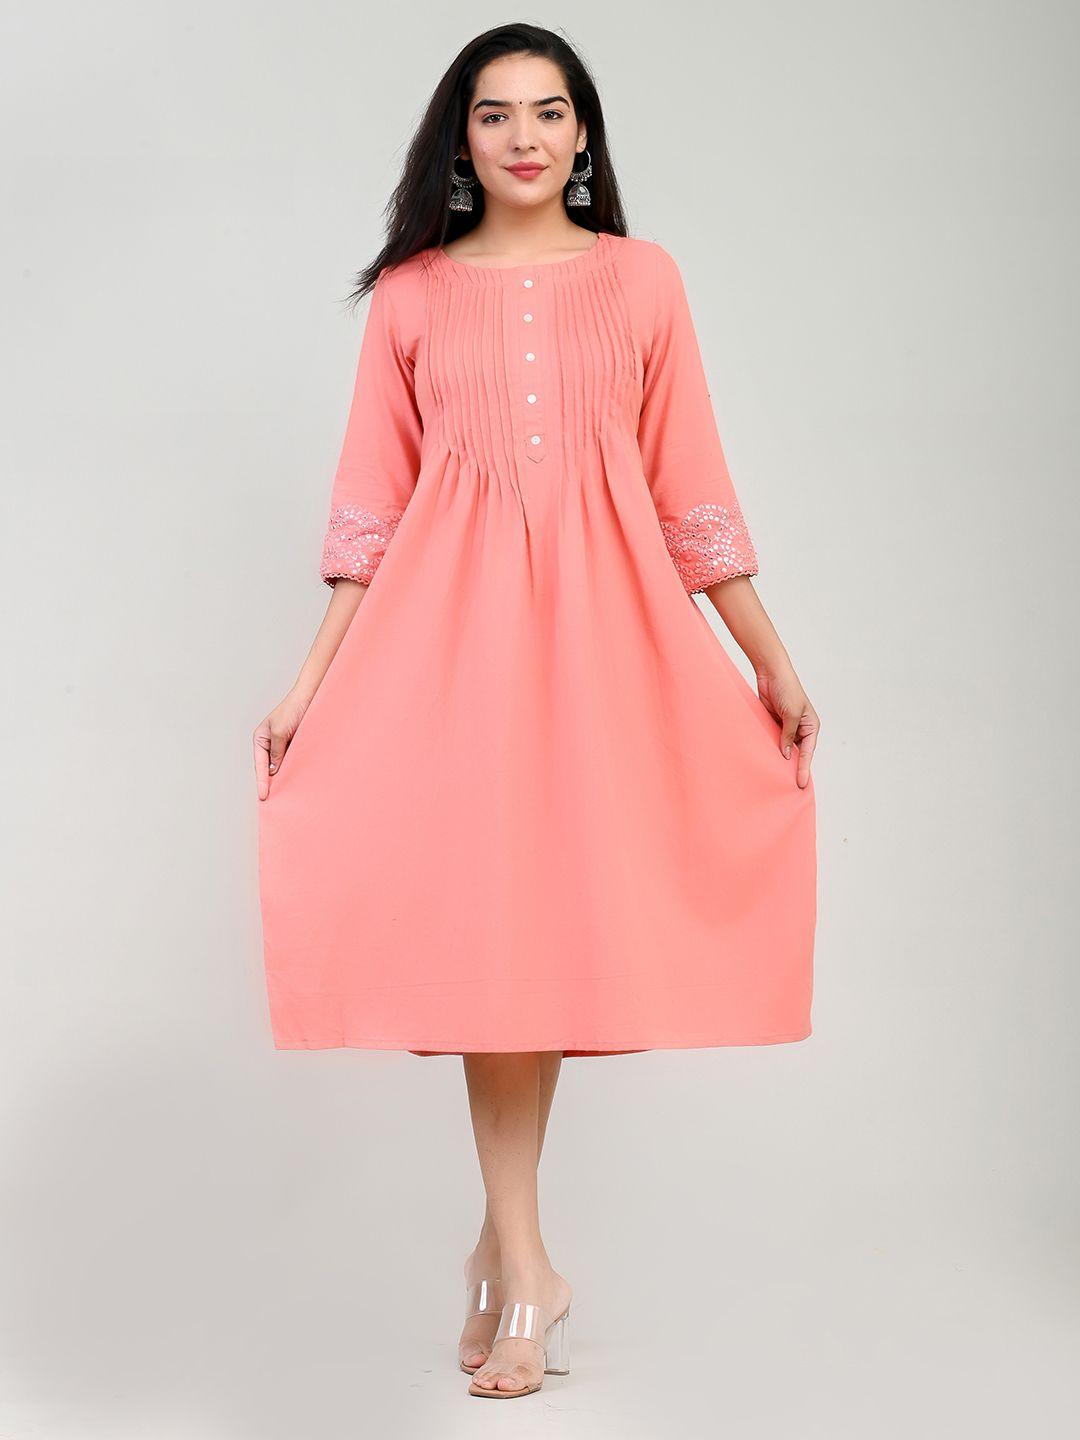 miramaar pleated pure cotton a-line ethnic dress